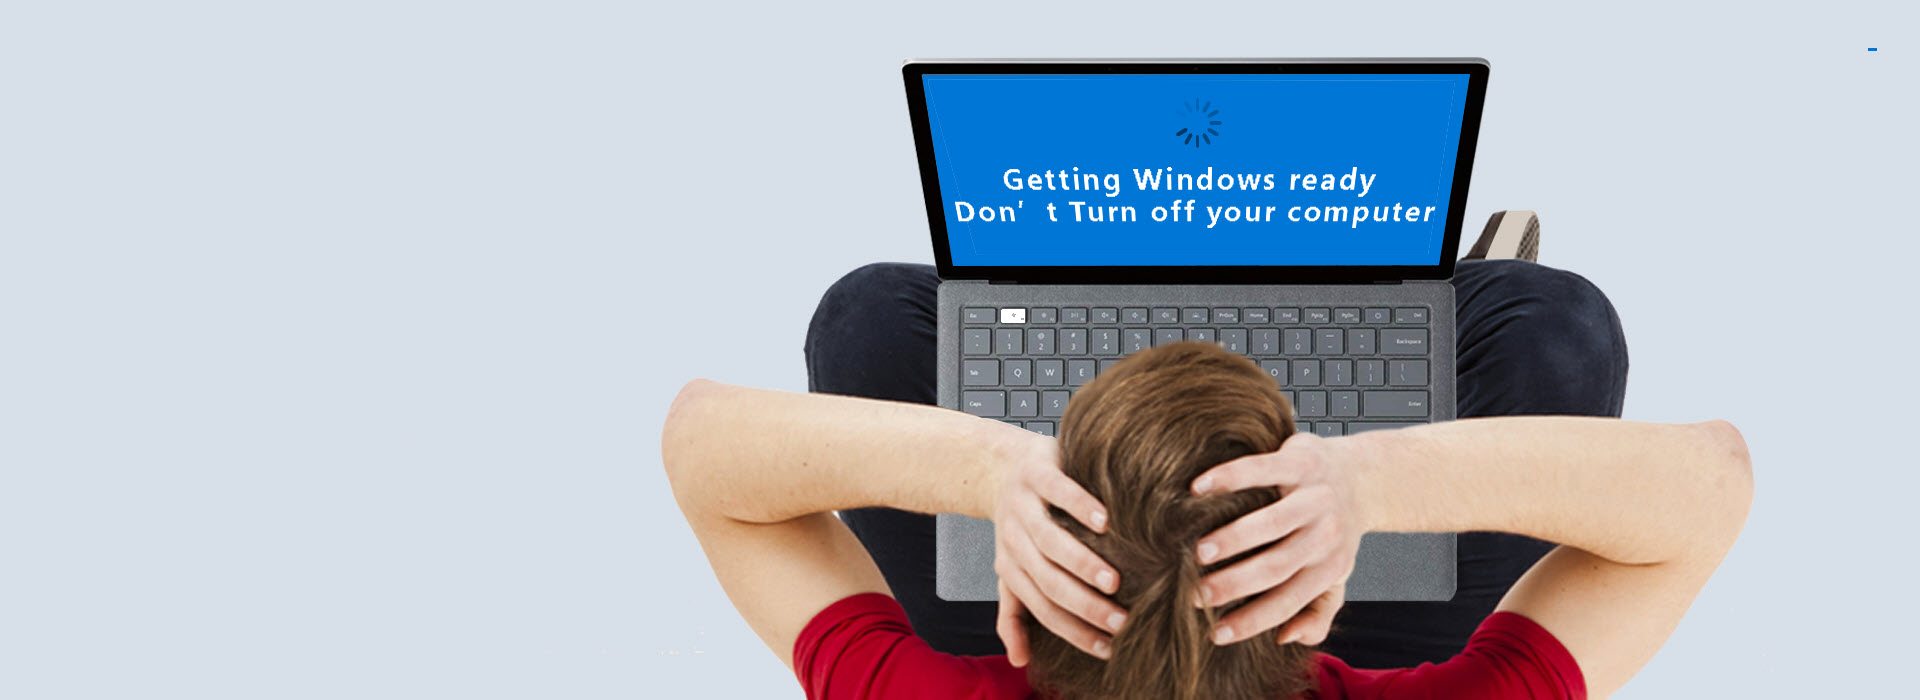 windows 10 update and shutdown every time